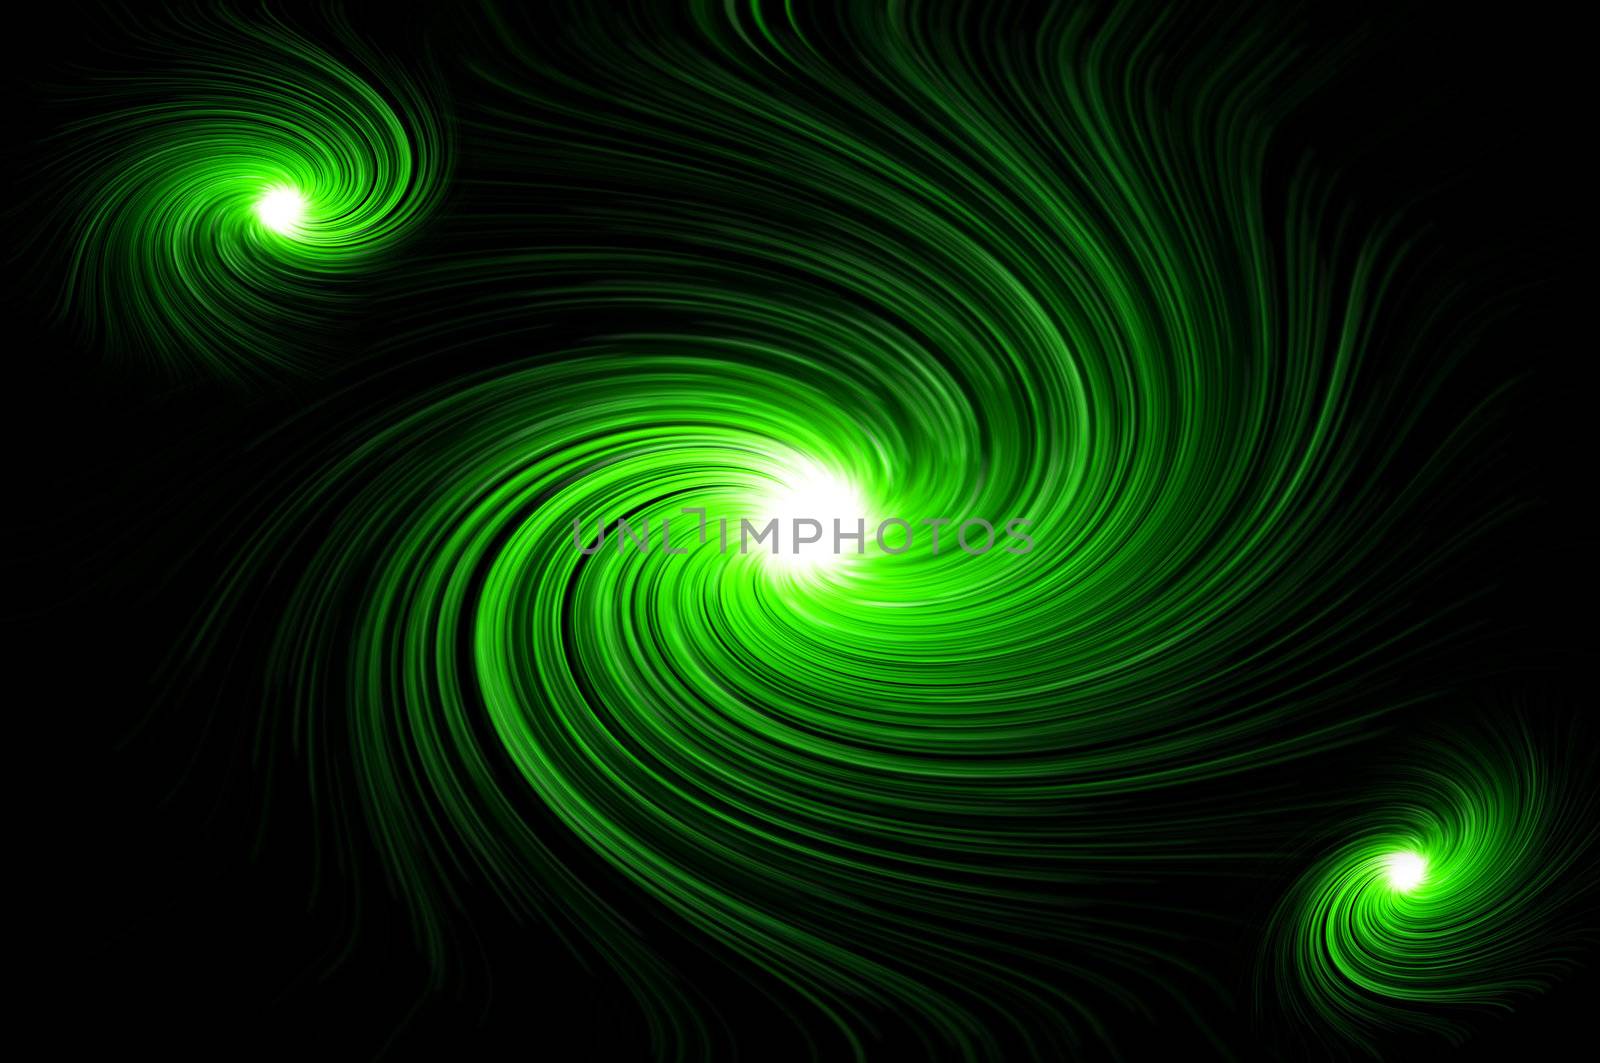 Vibrant green swirl by 72soul